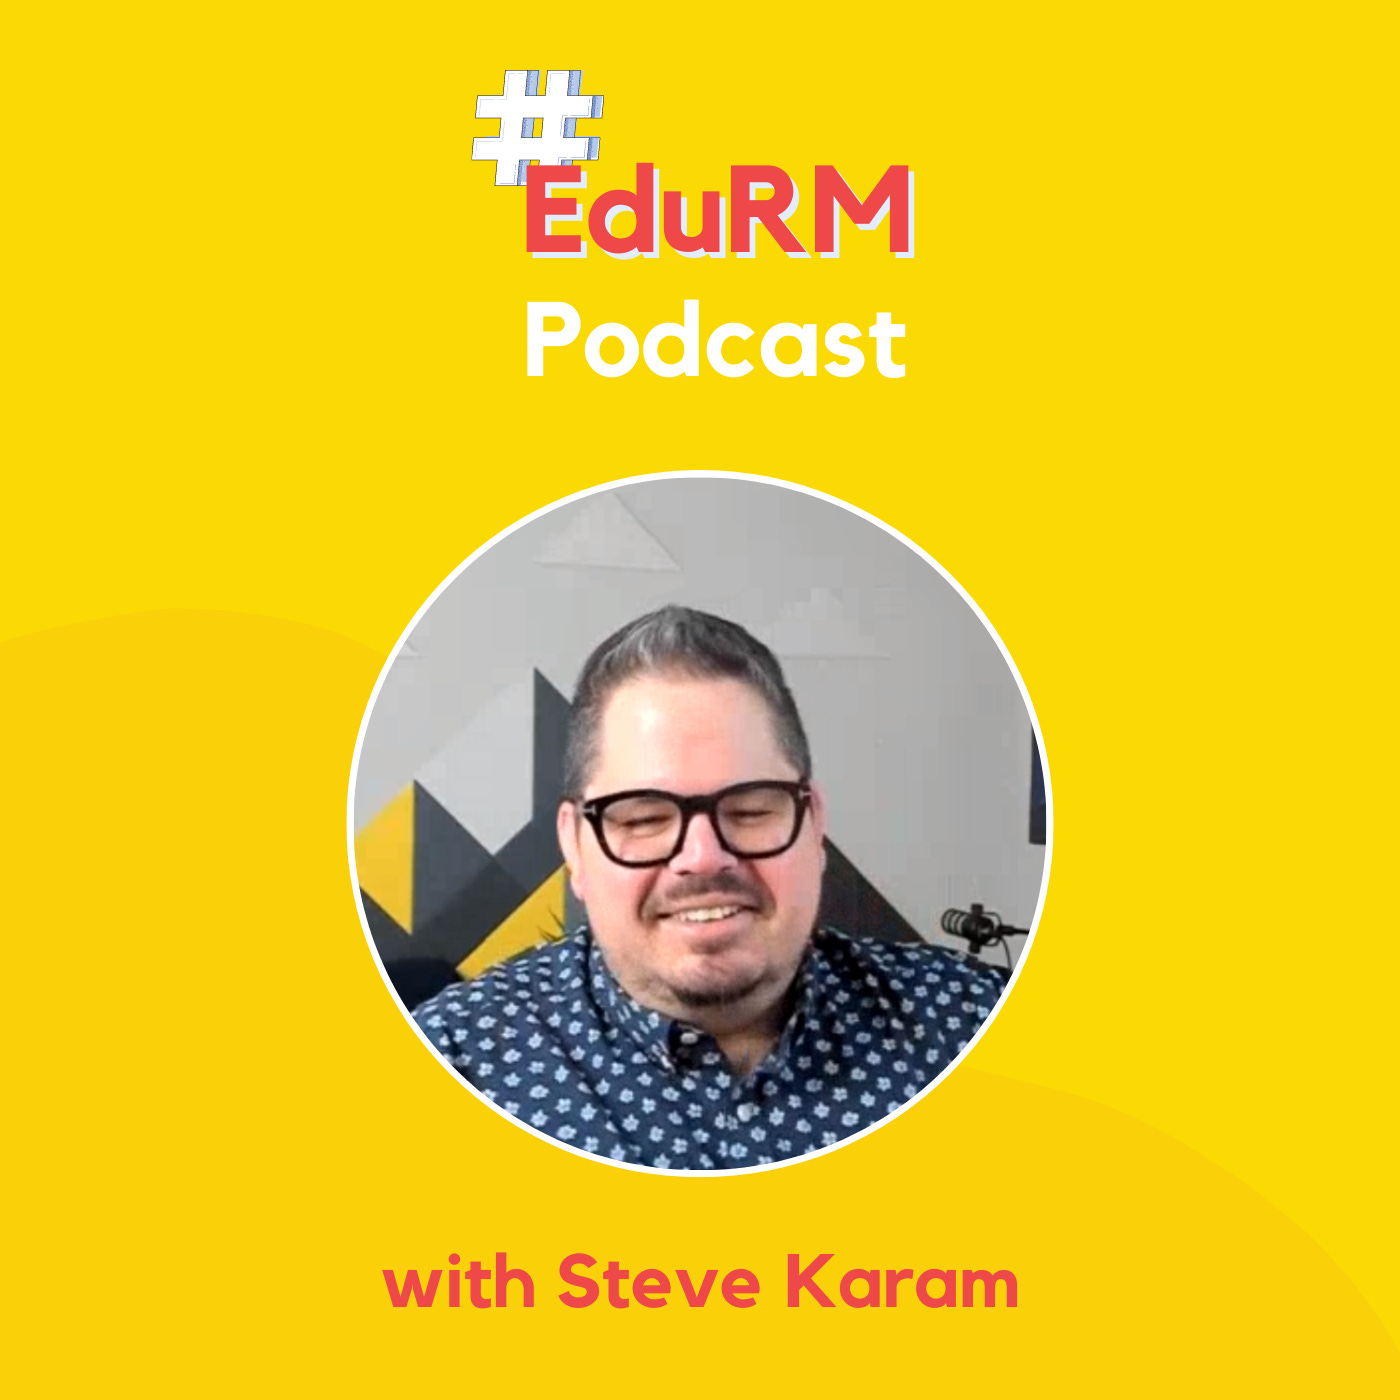 Image with Steve Karam and the EduRM logo